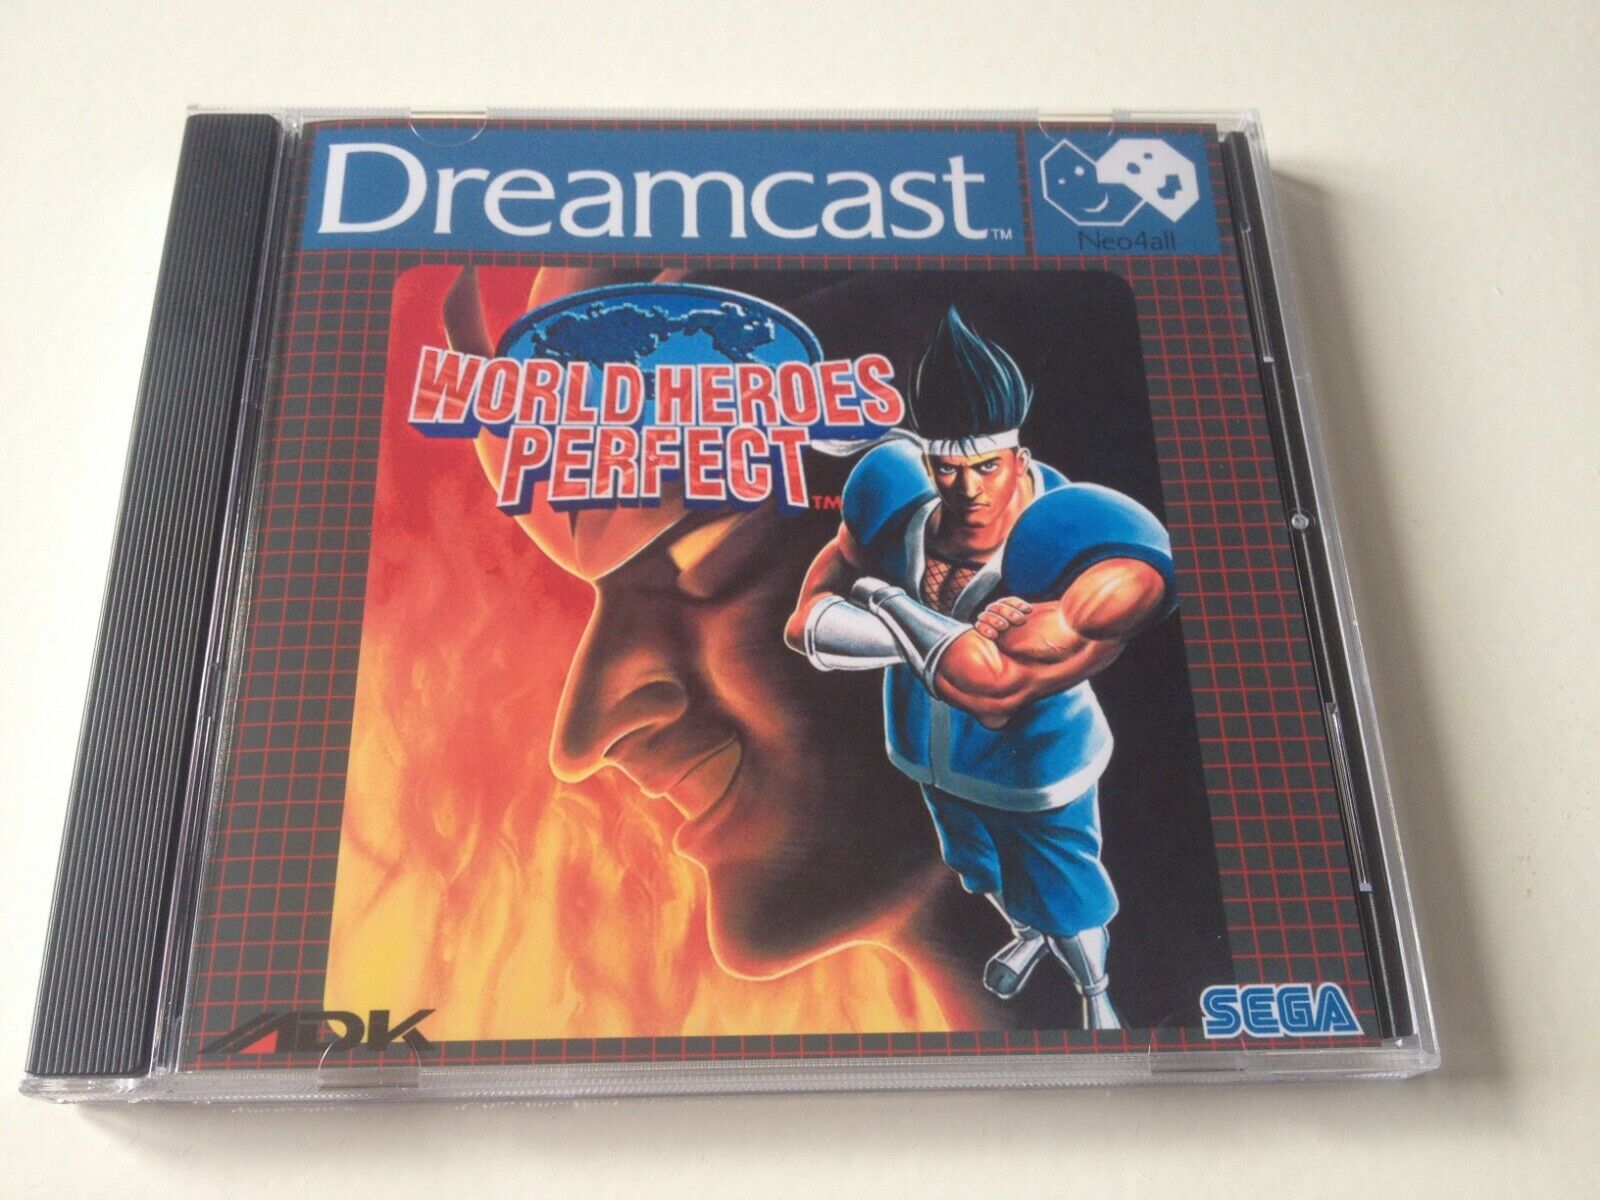 SEGA Dreamcast World Heroes Perfect ADK neo4all neo geo